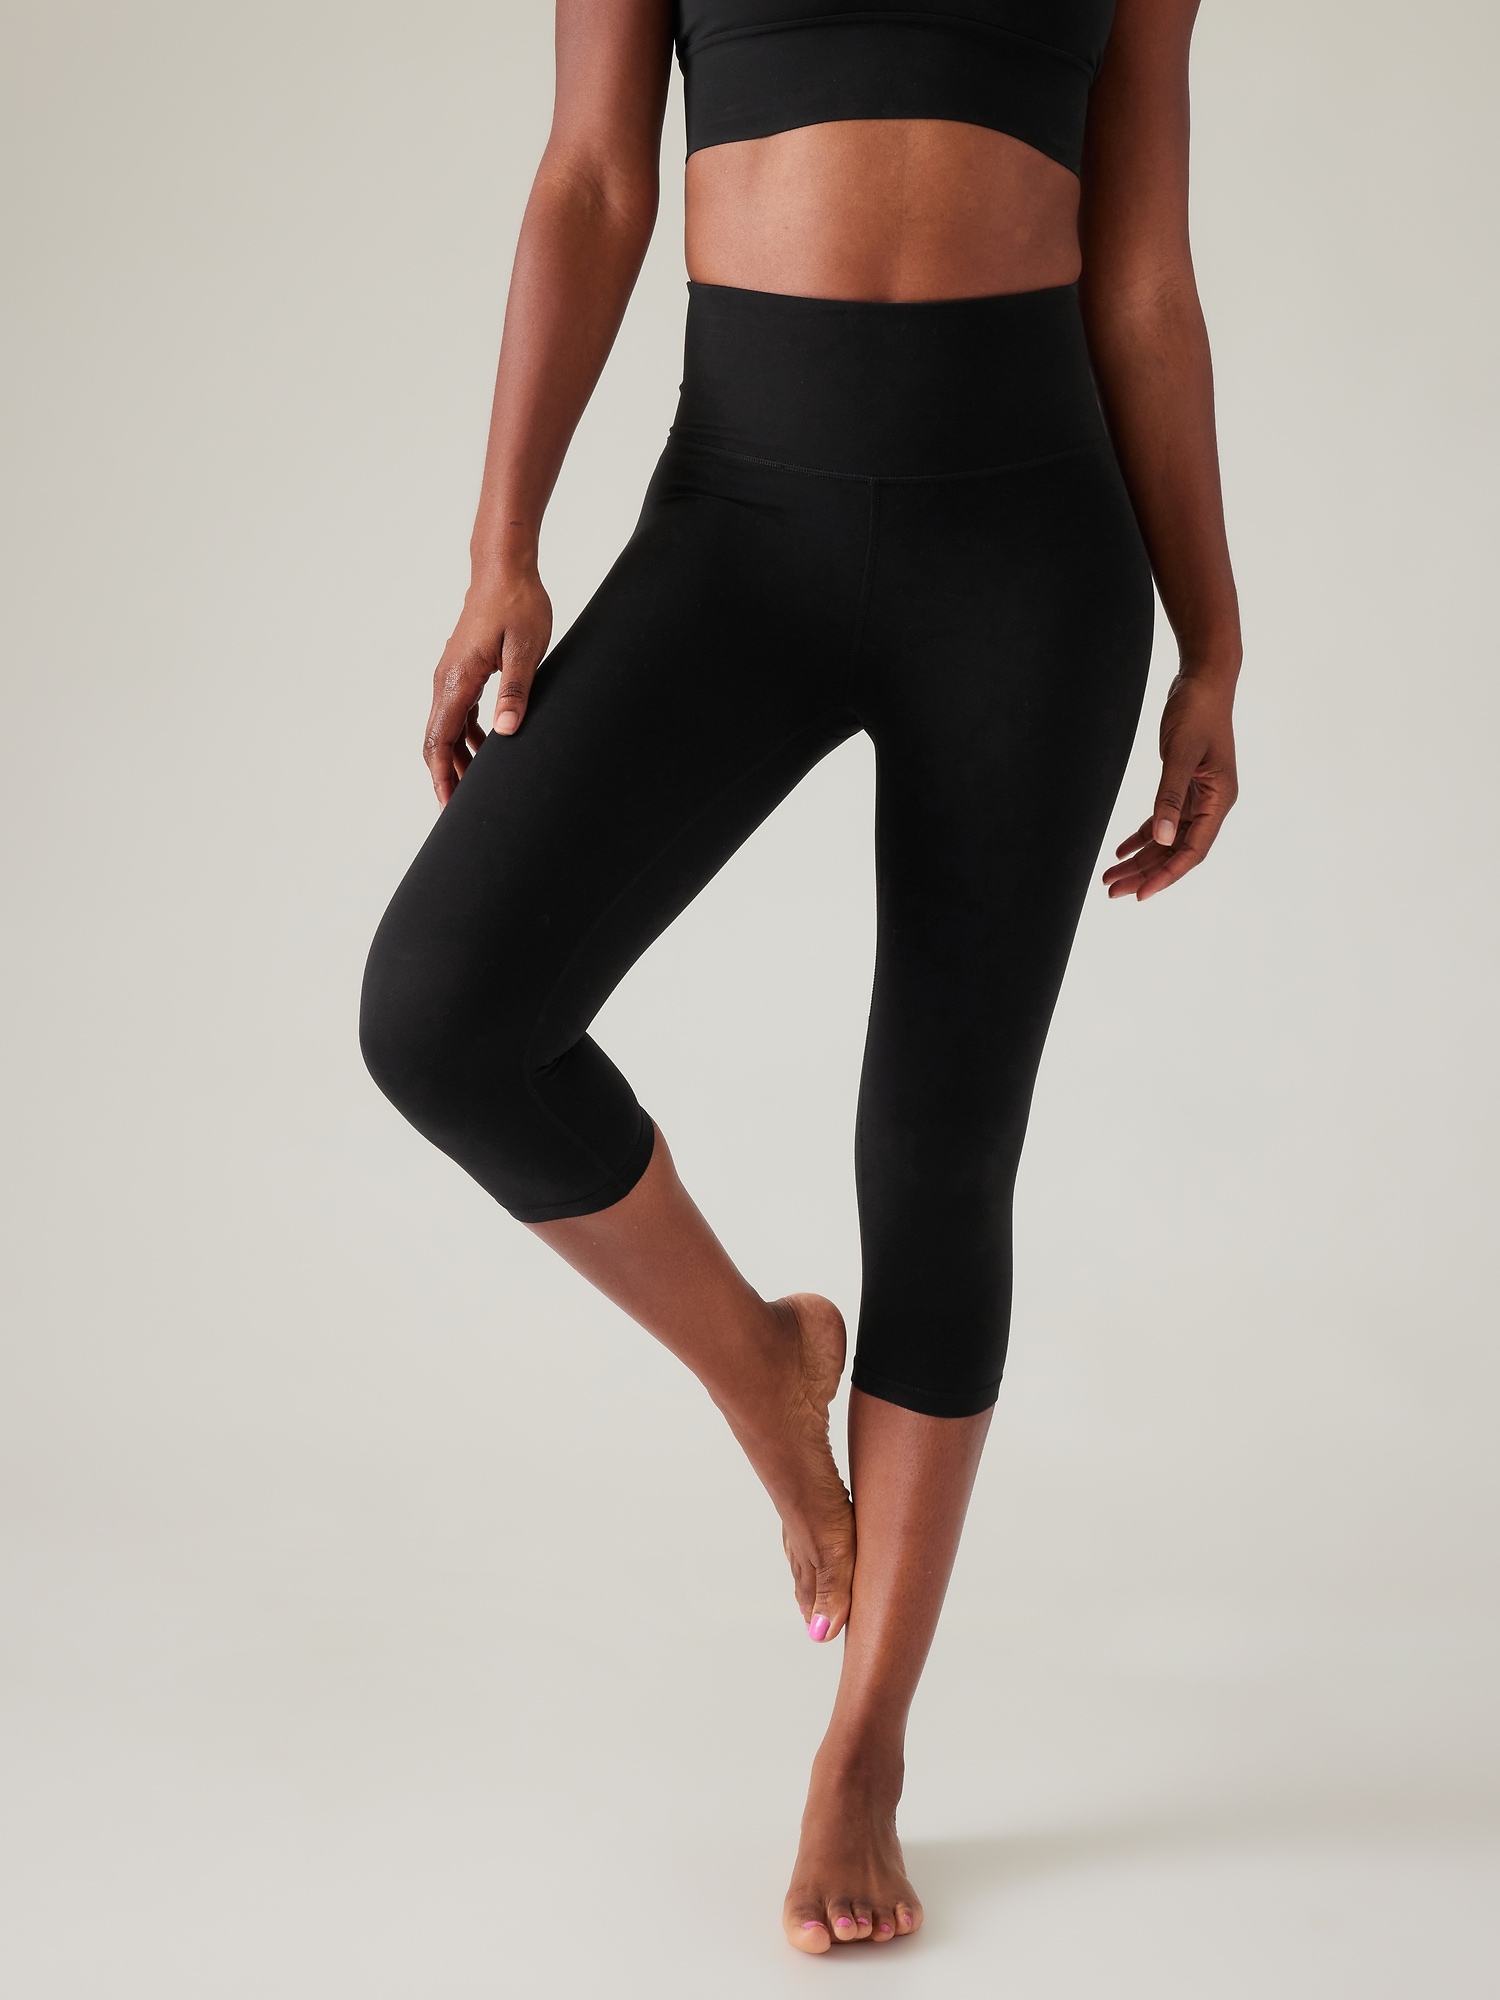 Boxate Yoga Pants for Womens – Pilates and Skating Pants for